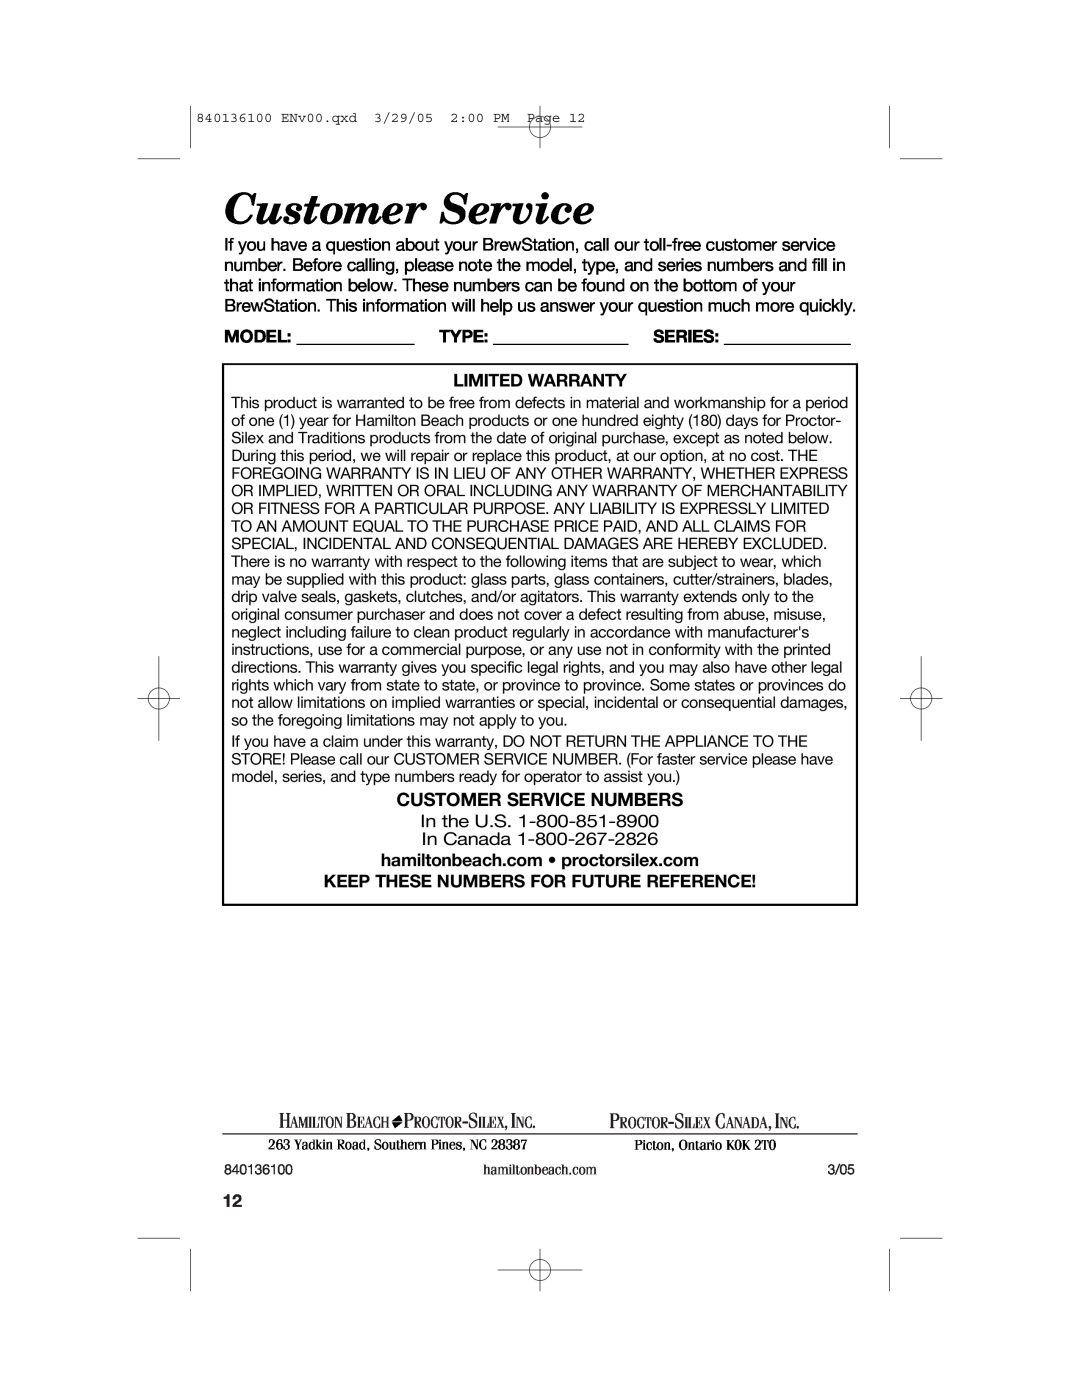 Hamilton Beach 840136100 manual Customer Service Numbers, Model Type Series Limited Warranty, Hamilton Beach 